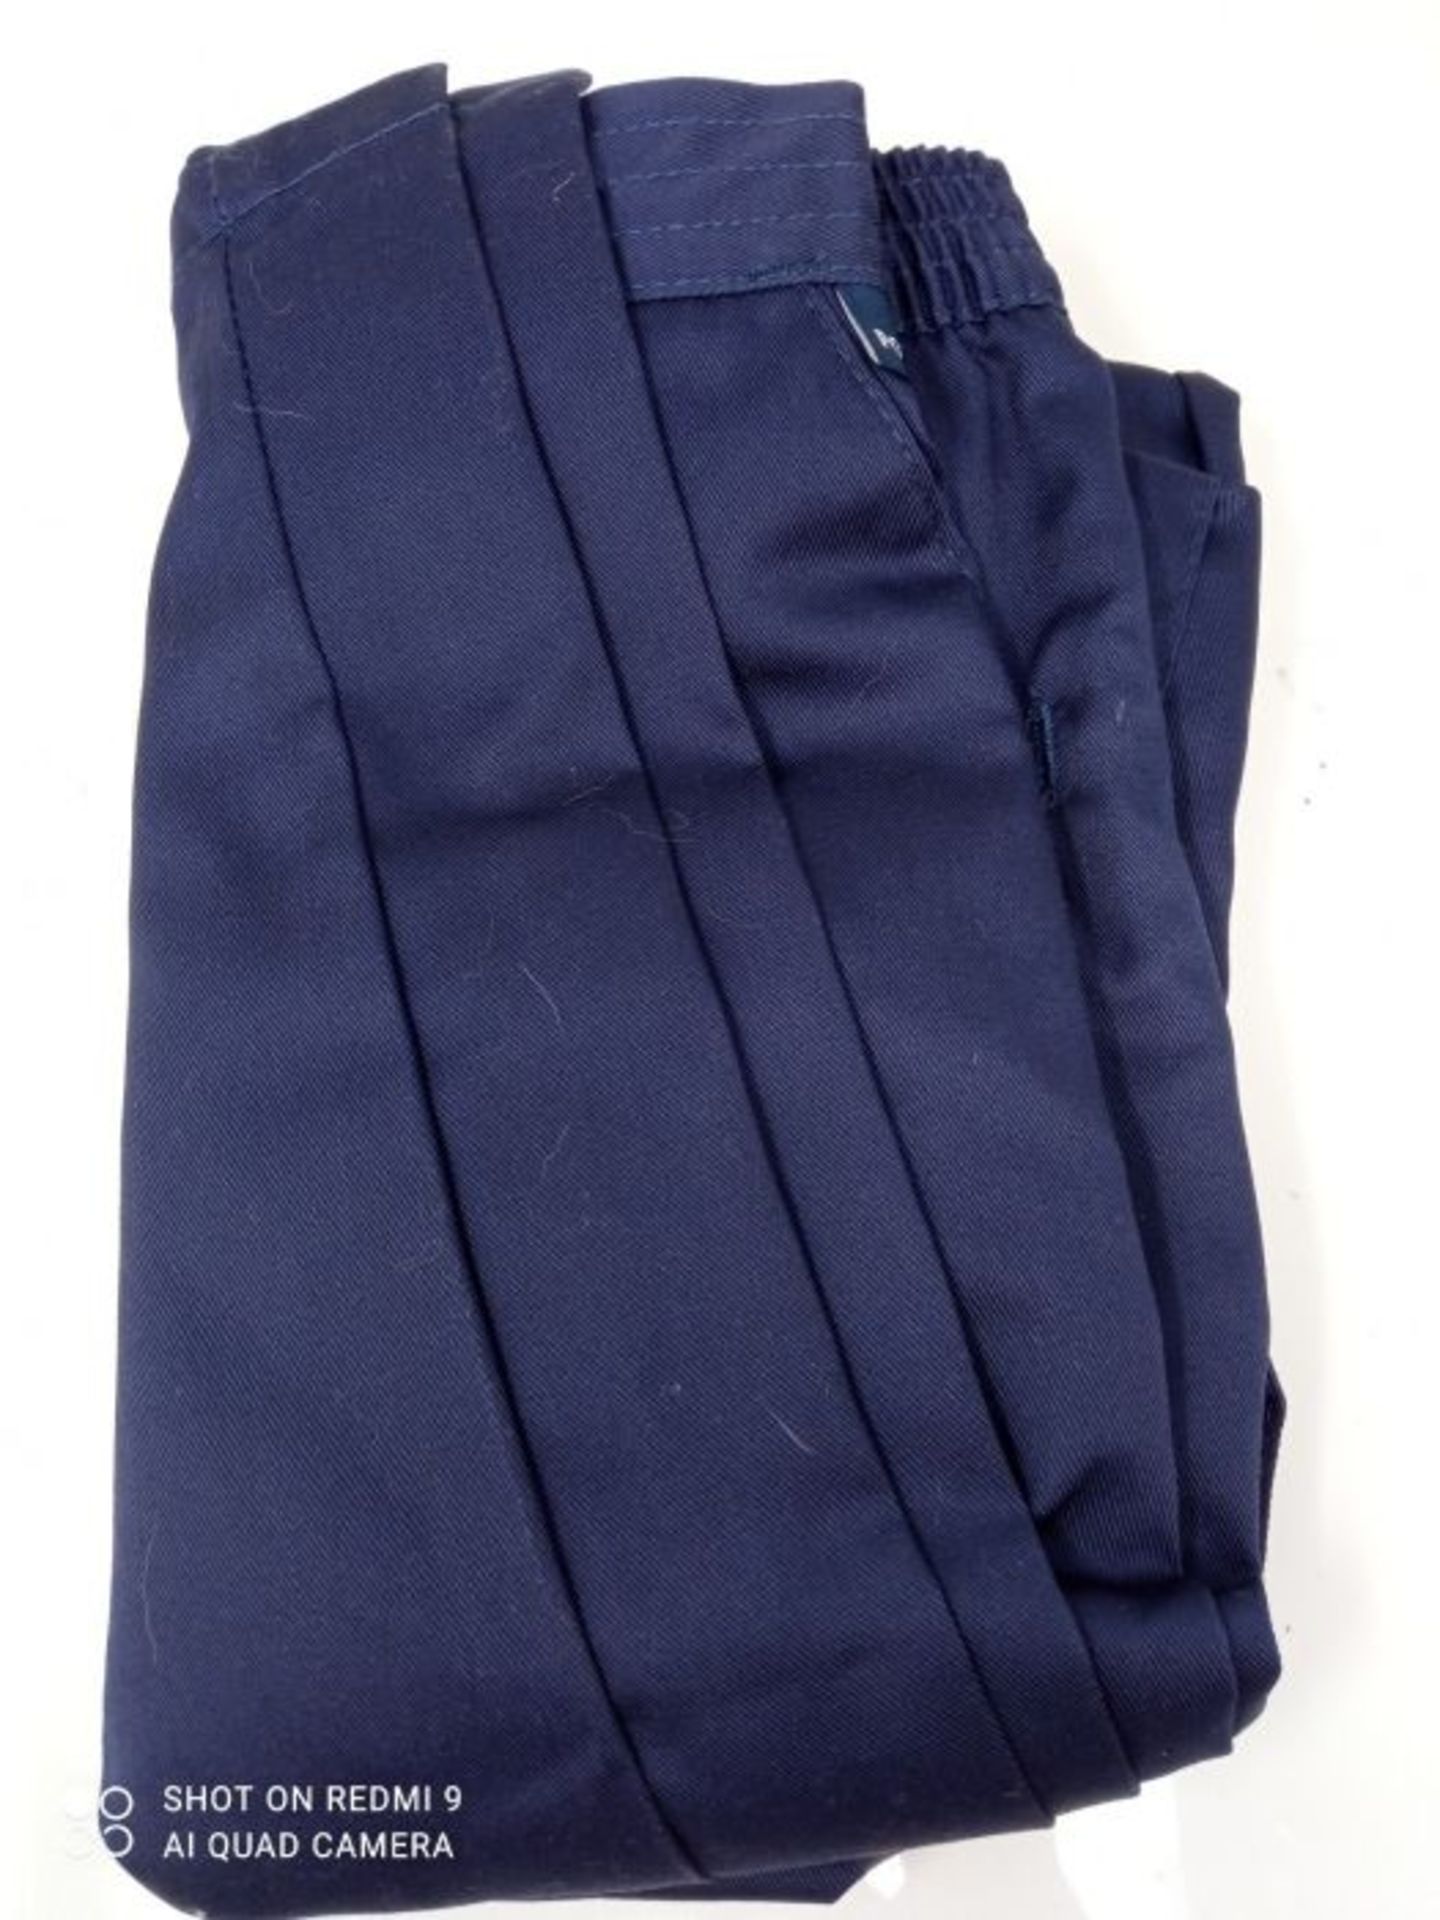 Portwest Ladies Combat Trousers, Regular Length, Colour: Navy, Size: XL, C099NARXL - Image 2 of 3